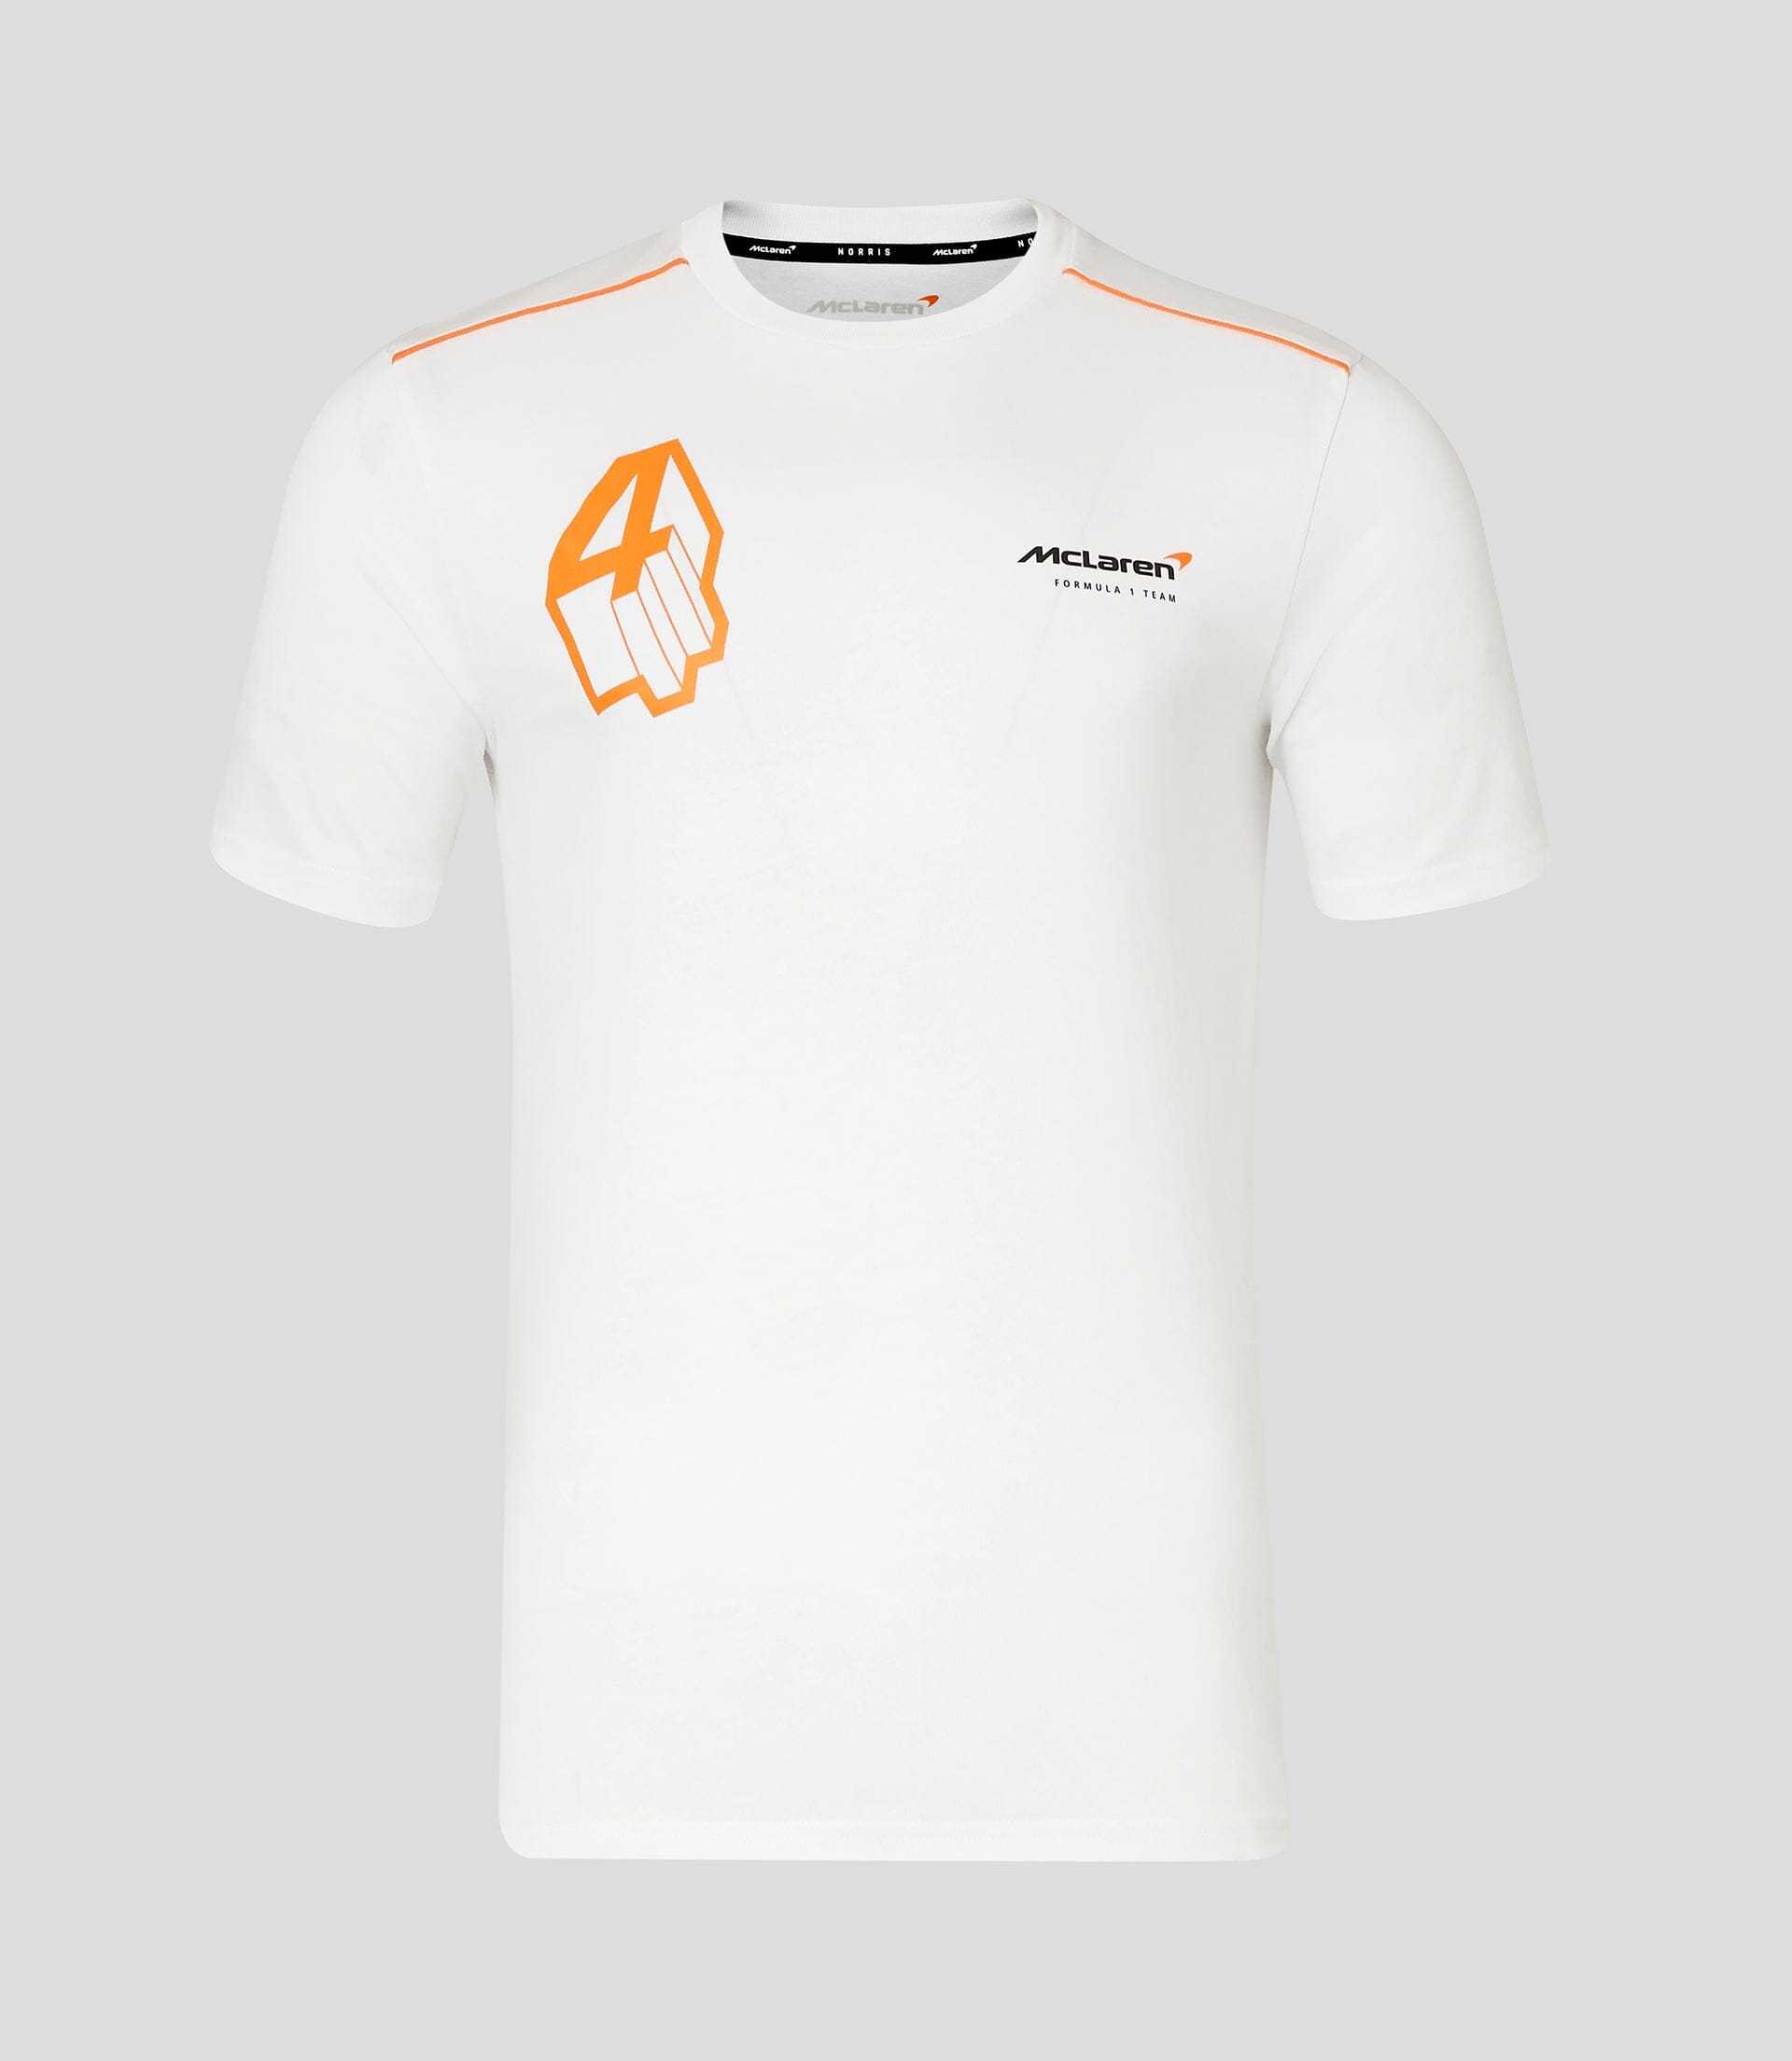 McLaren F1 Lando Norris Core Driver T-Shirt - Anthracite/White